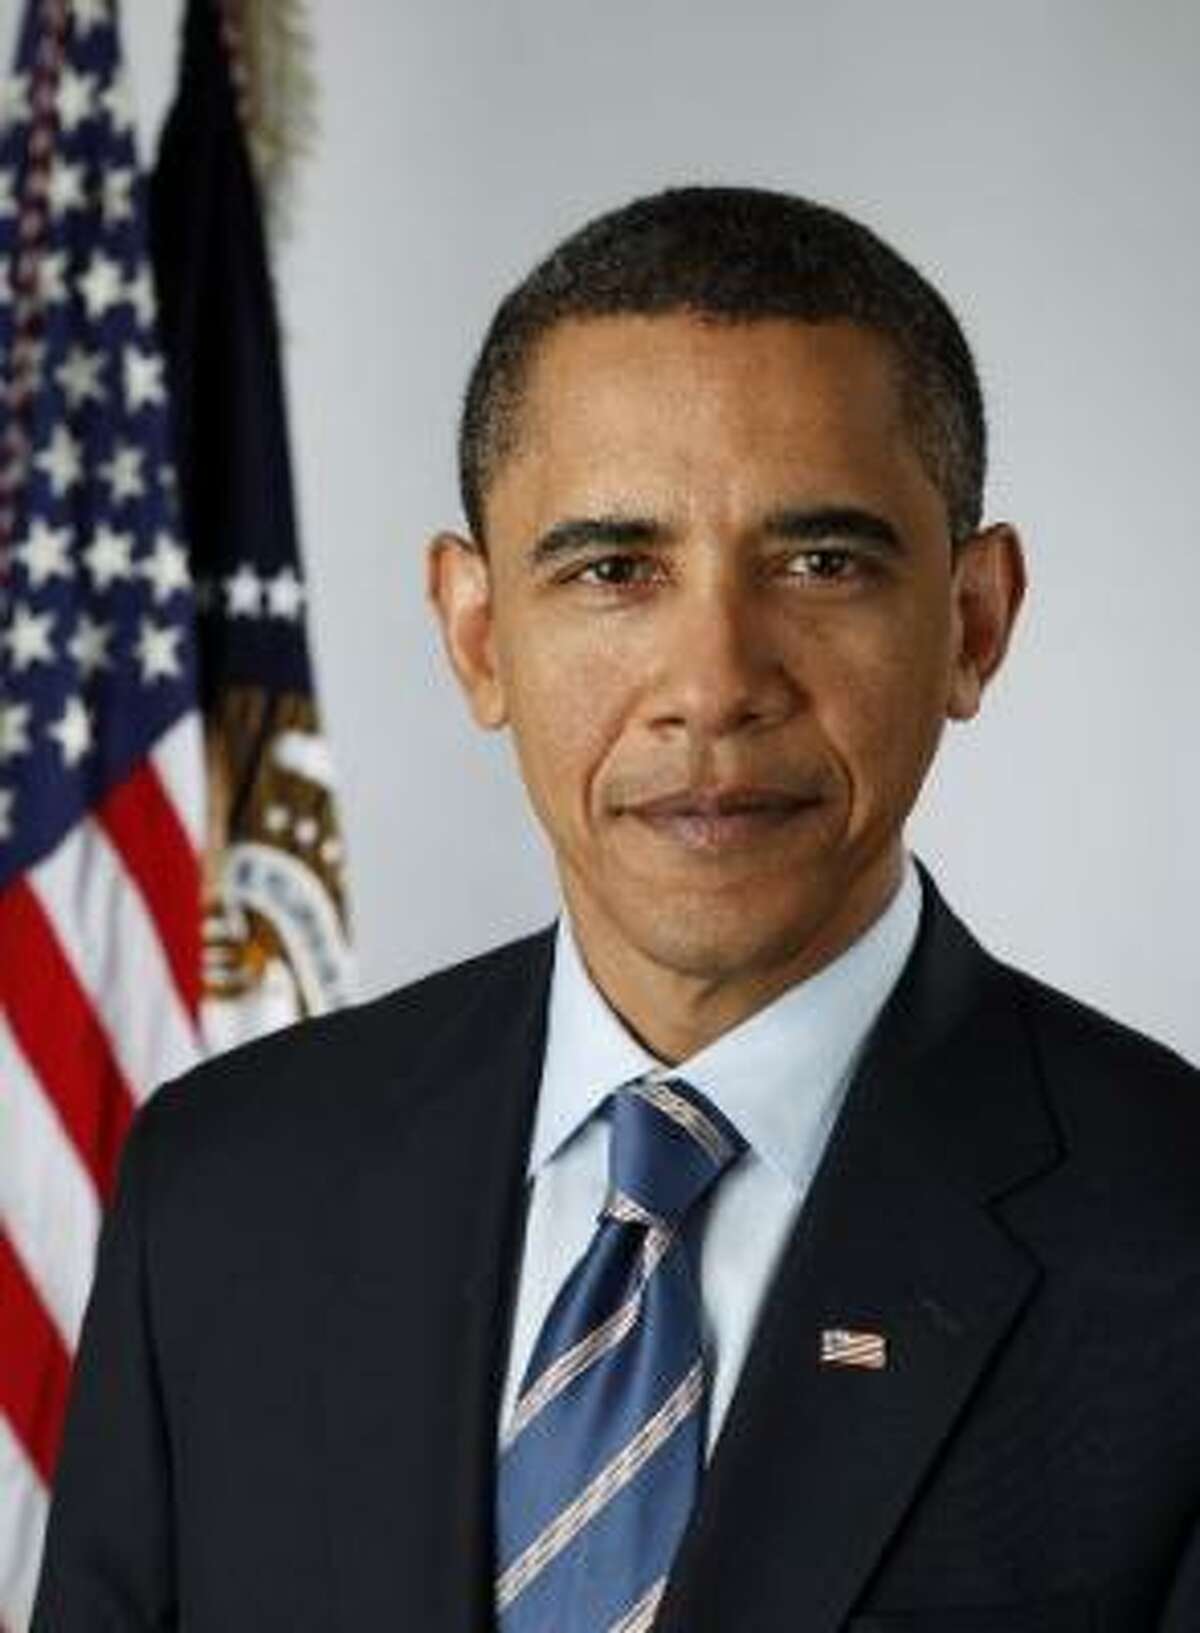 Leader of the Year: President Barack Obama